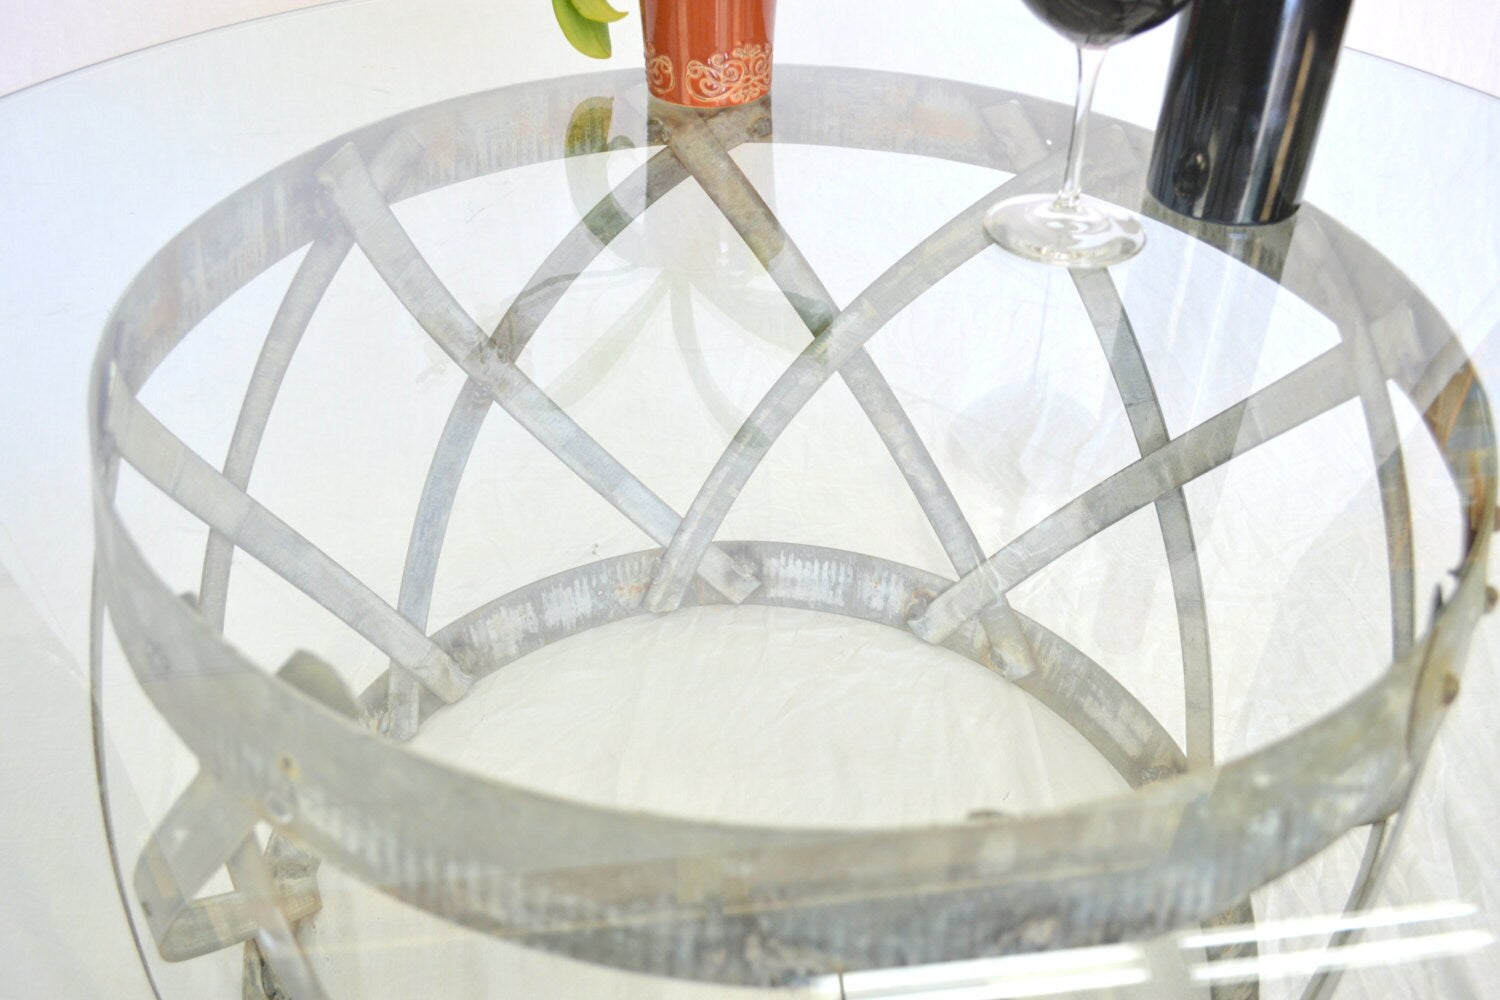 Wine Barrel Ring Coffee Table - Kela - made from retired Napa wine barrel rings